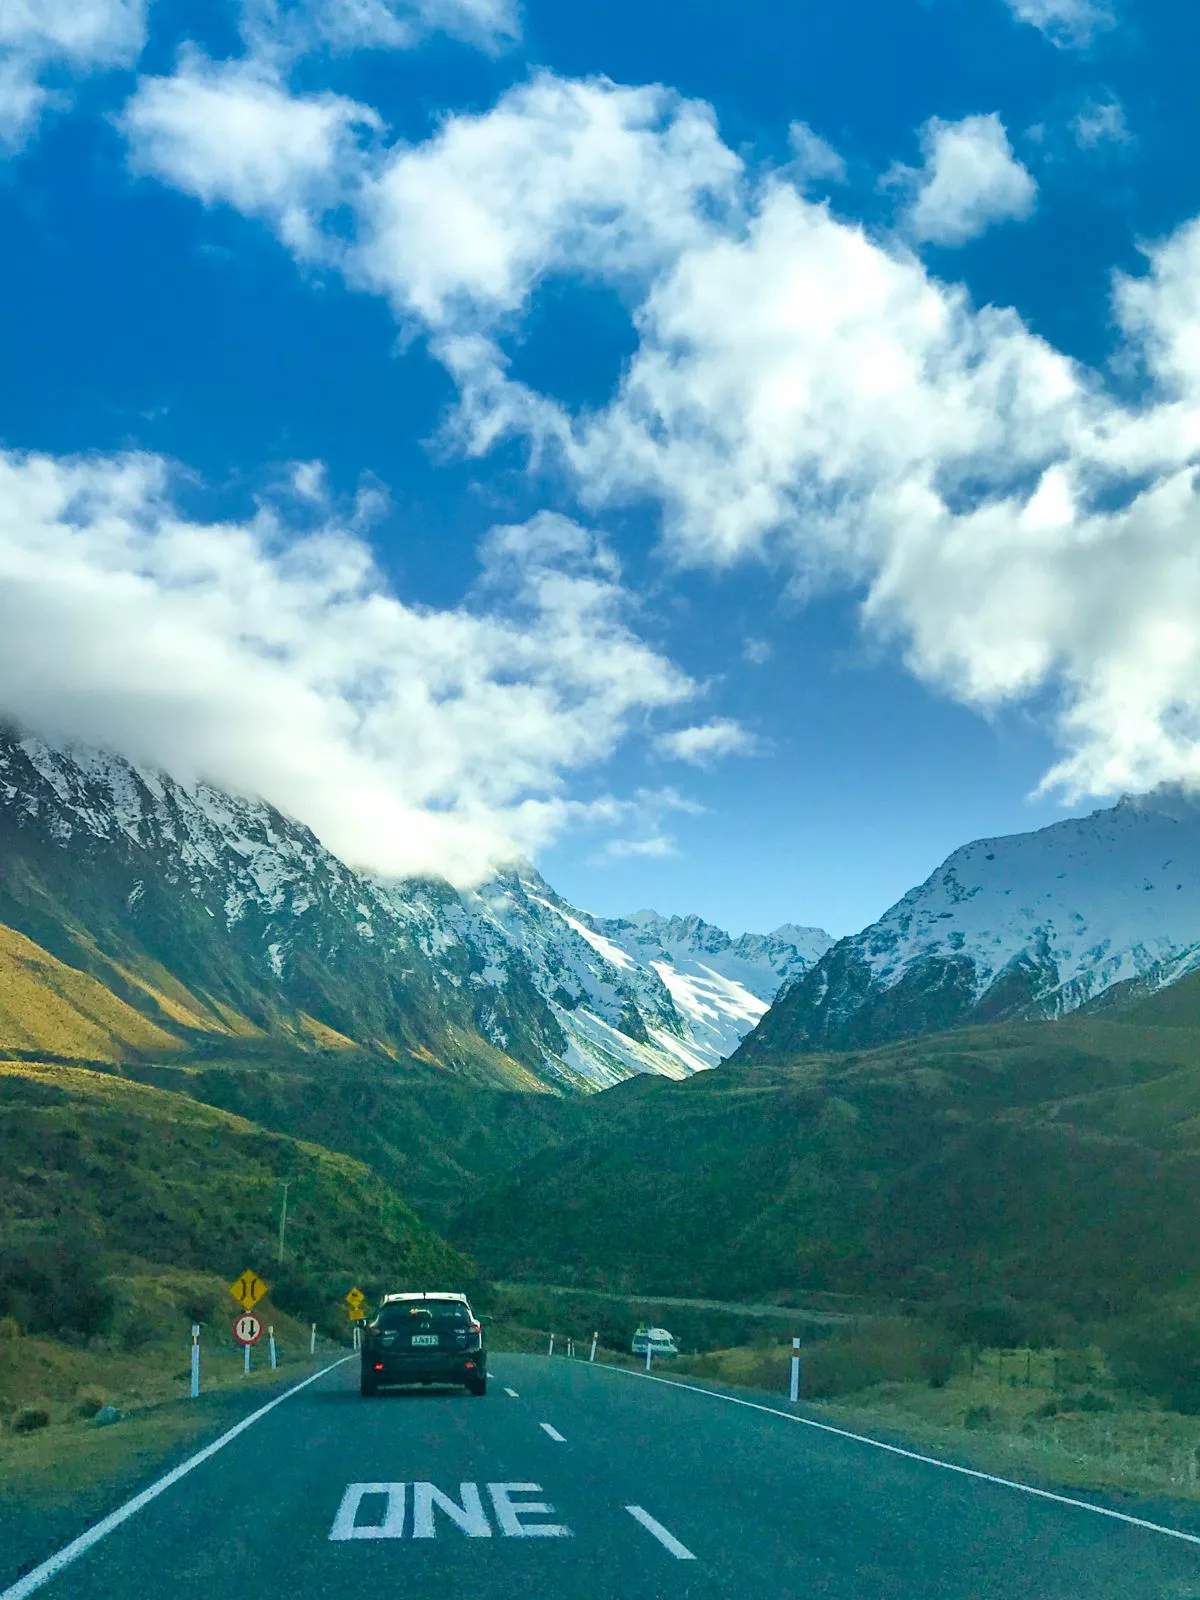 Alaska wilderness scenery